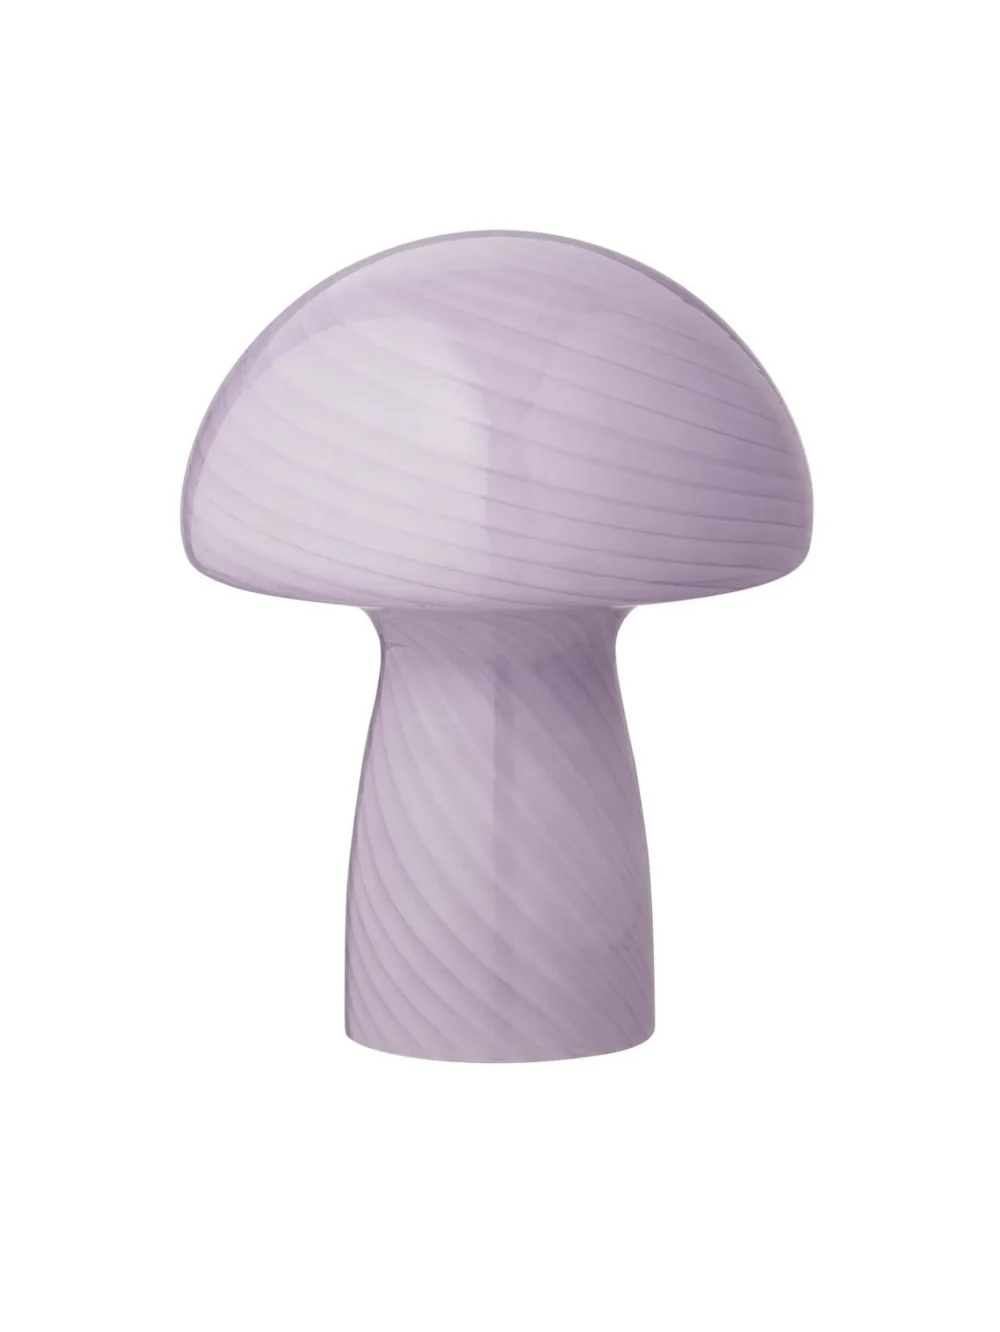 syren lilla mushroom, mushroom lampe fra bahne,bordlampe, stor mushroom, lille mushroom